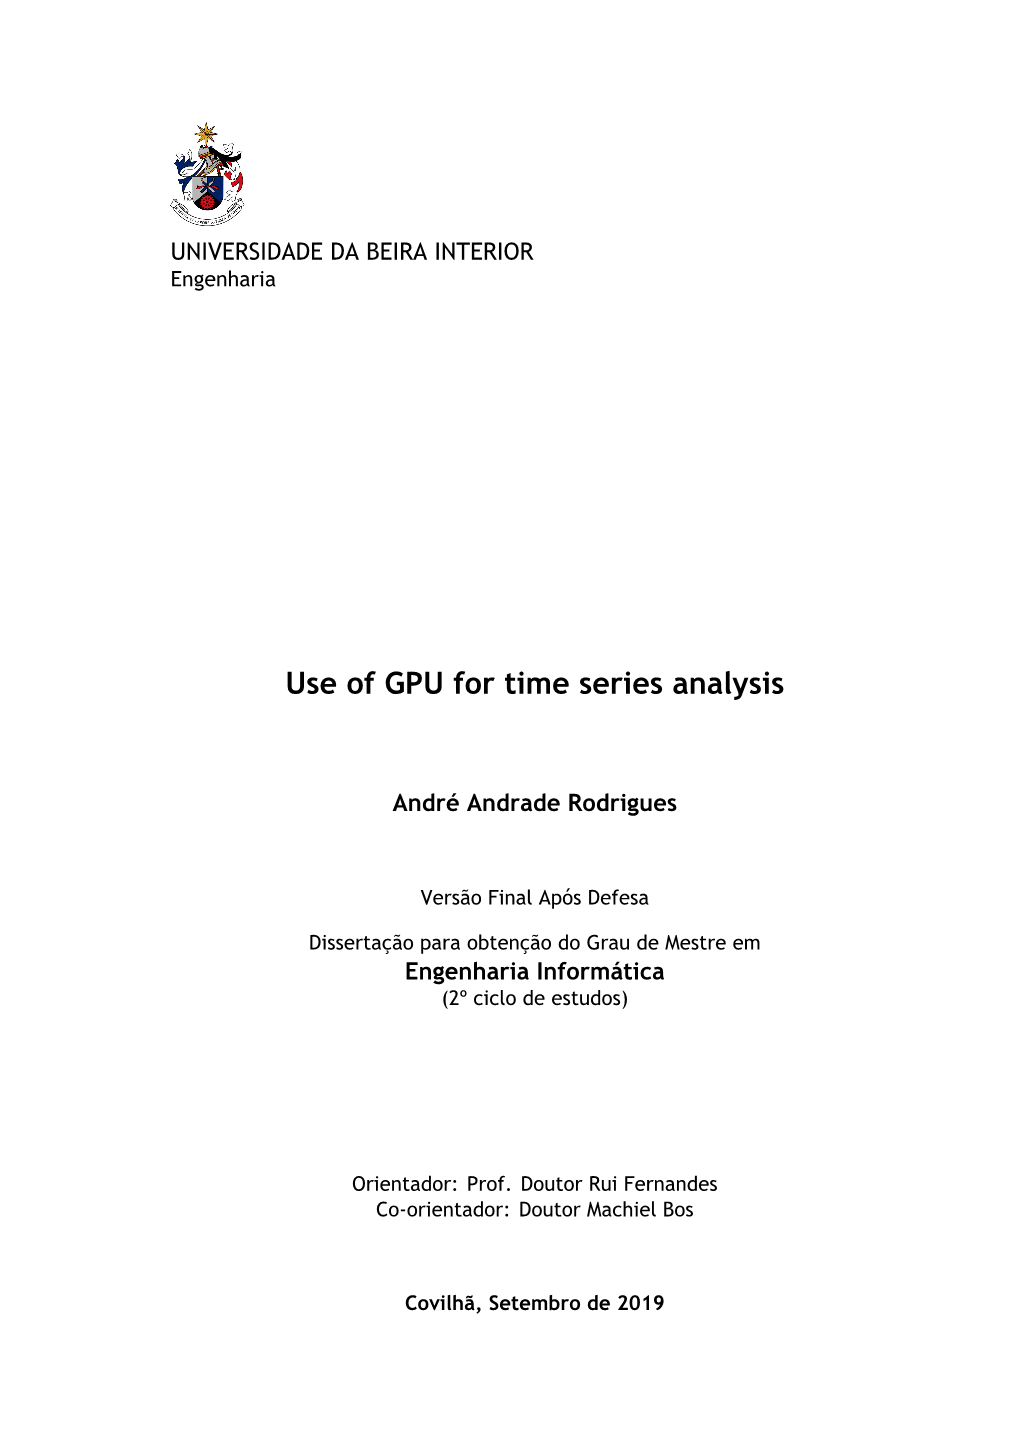 Use of GPU for Time Series Analysis